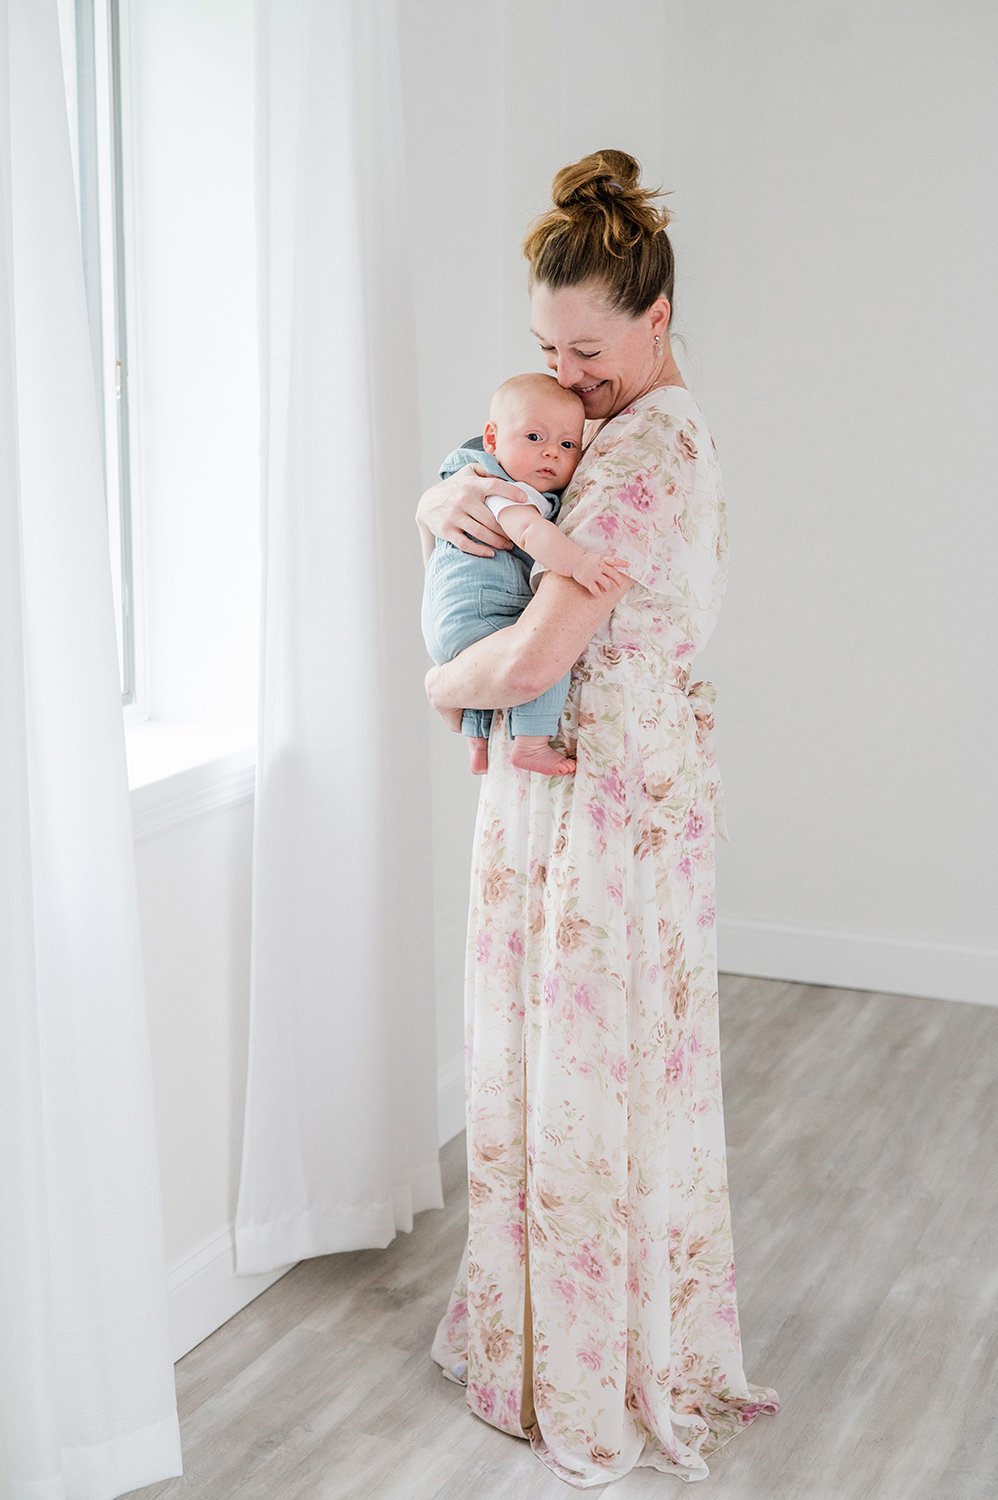 Mom-In-Long-Dress-Holding-Baby-Boy-By-Window-Oceanport-NJ-Photography-Studio.jpg